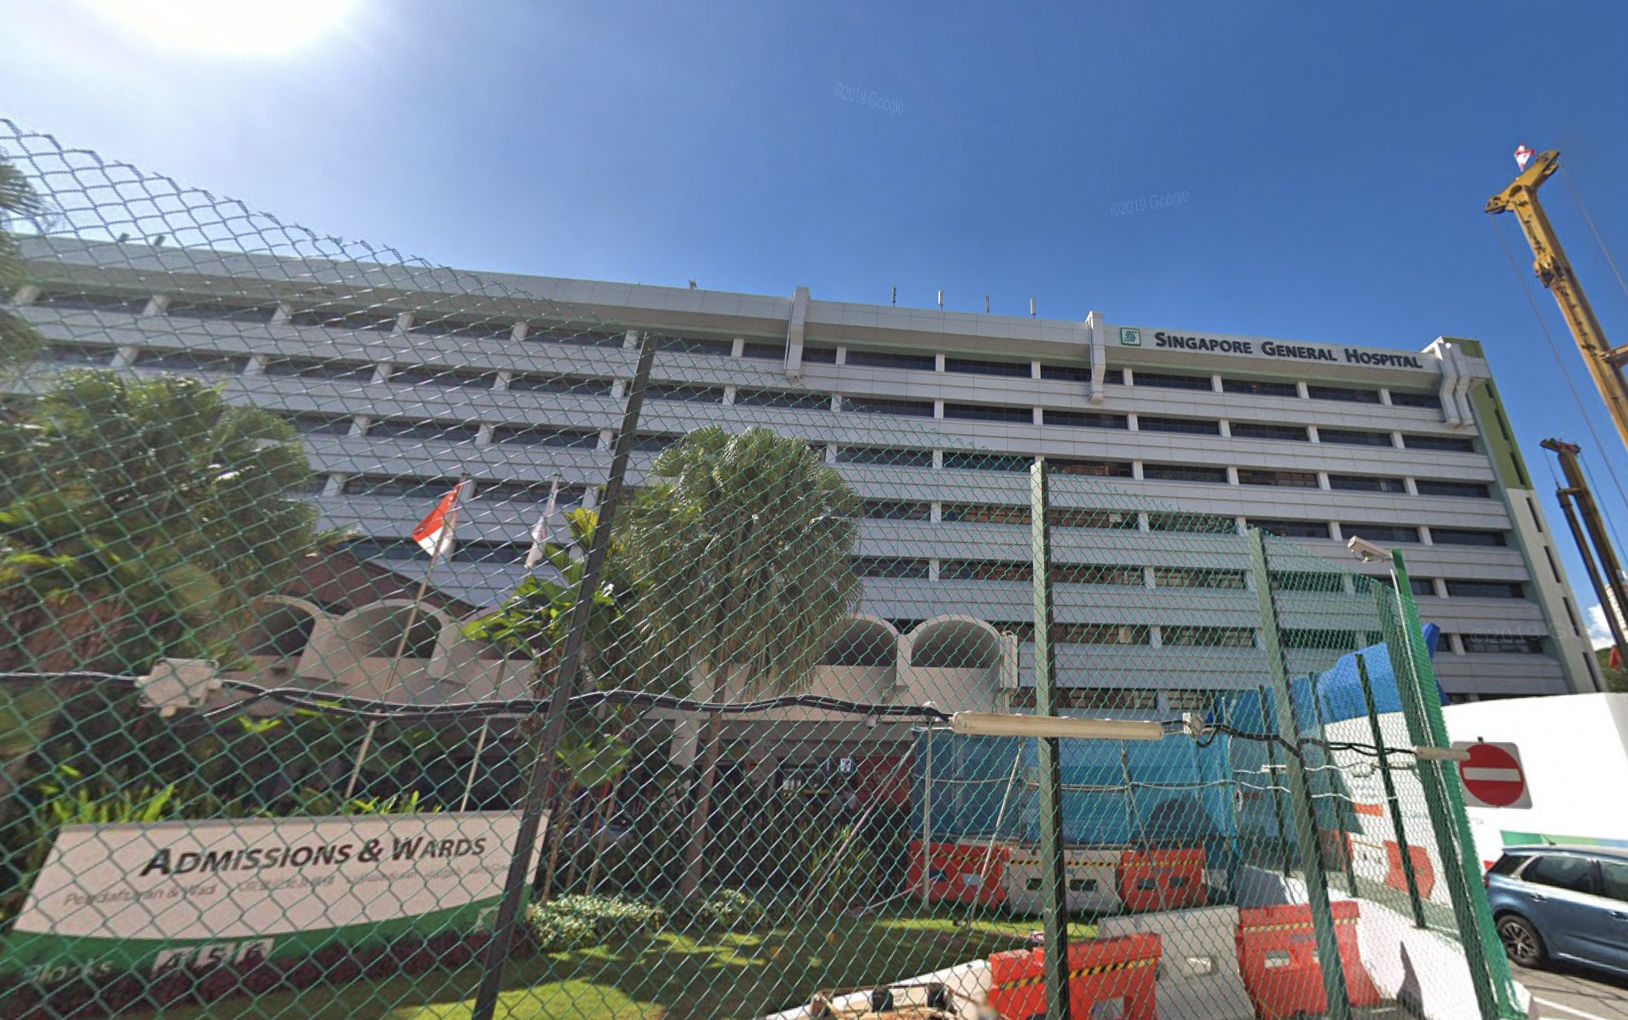 Google Street View screen capture of Singapore General Hospital.